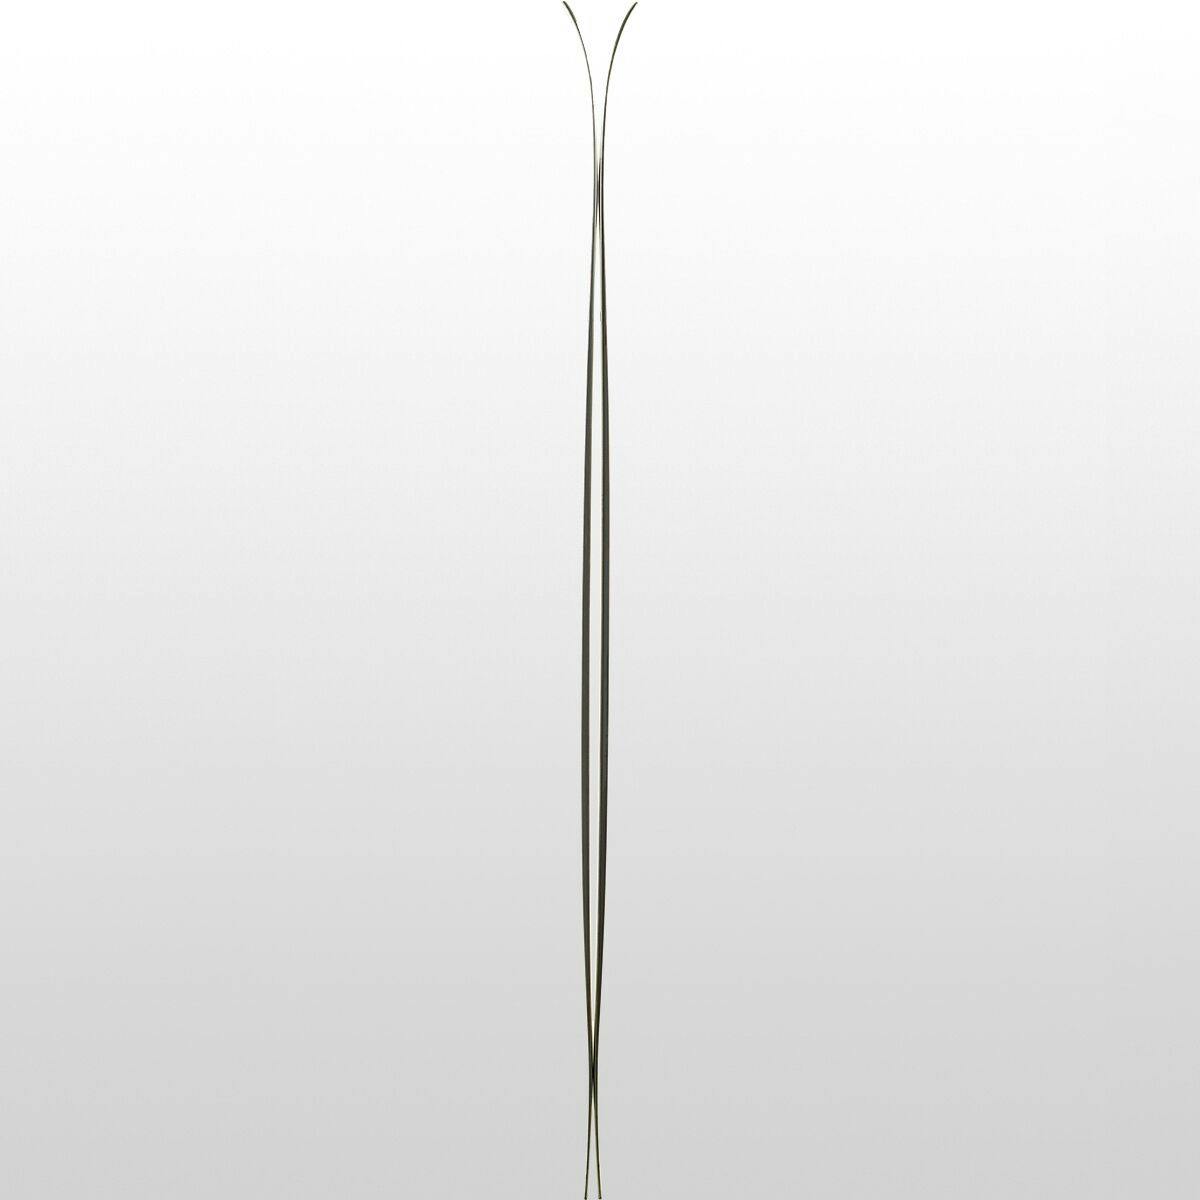 Salomon Stance 96 Skis · 2022 · 182 cm